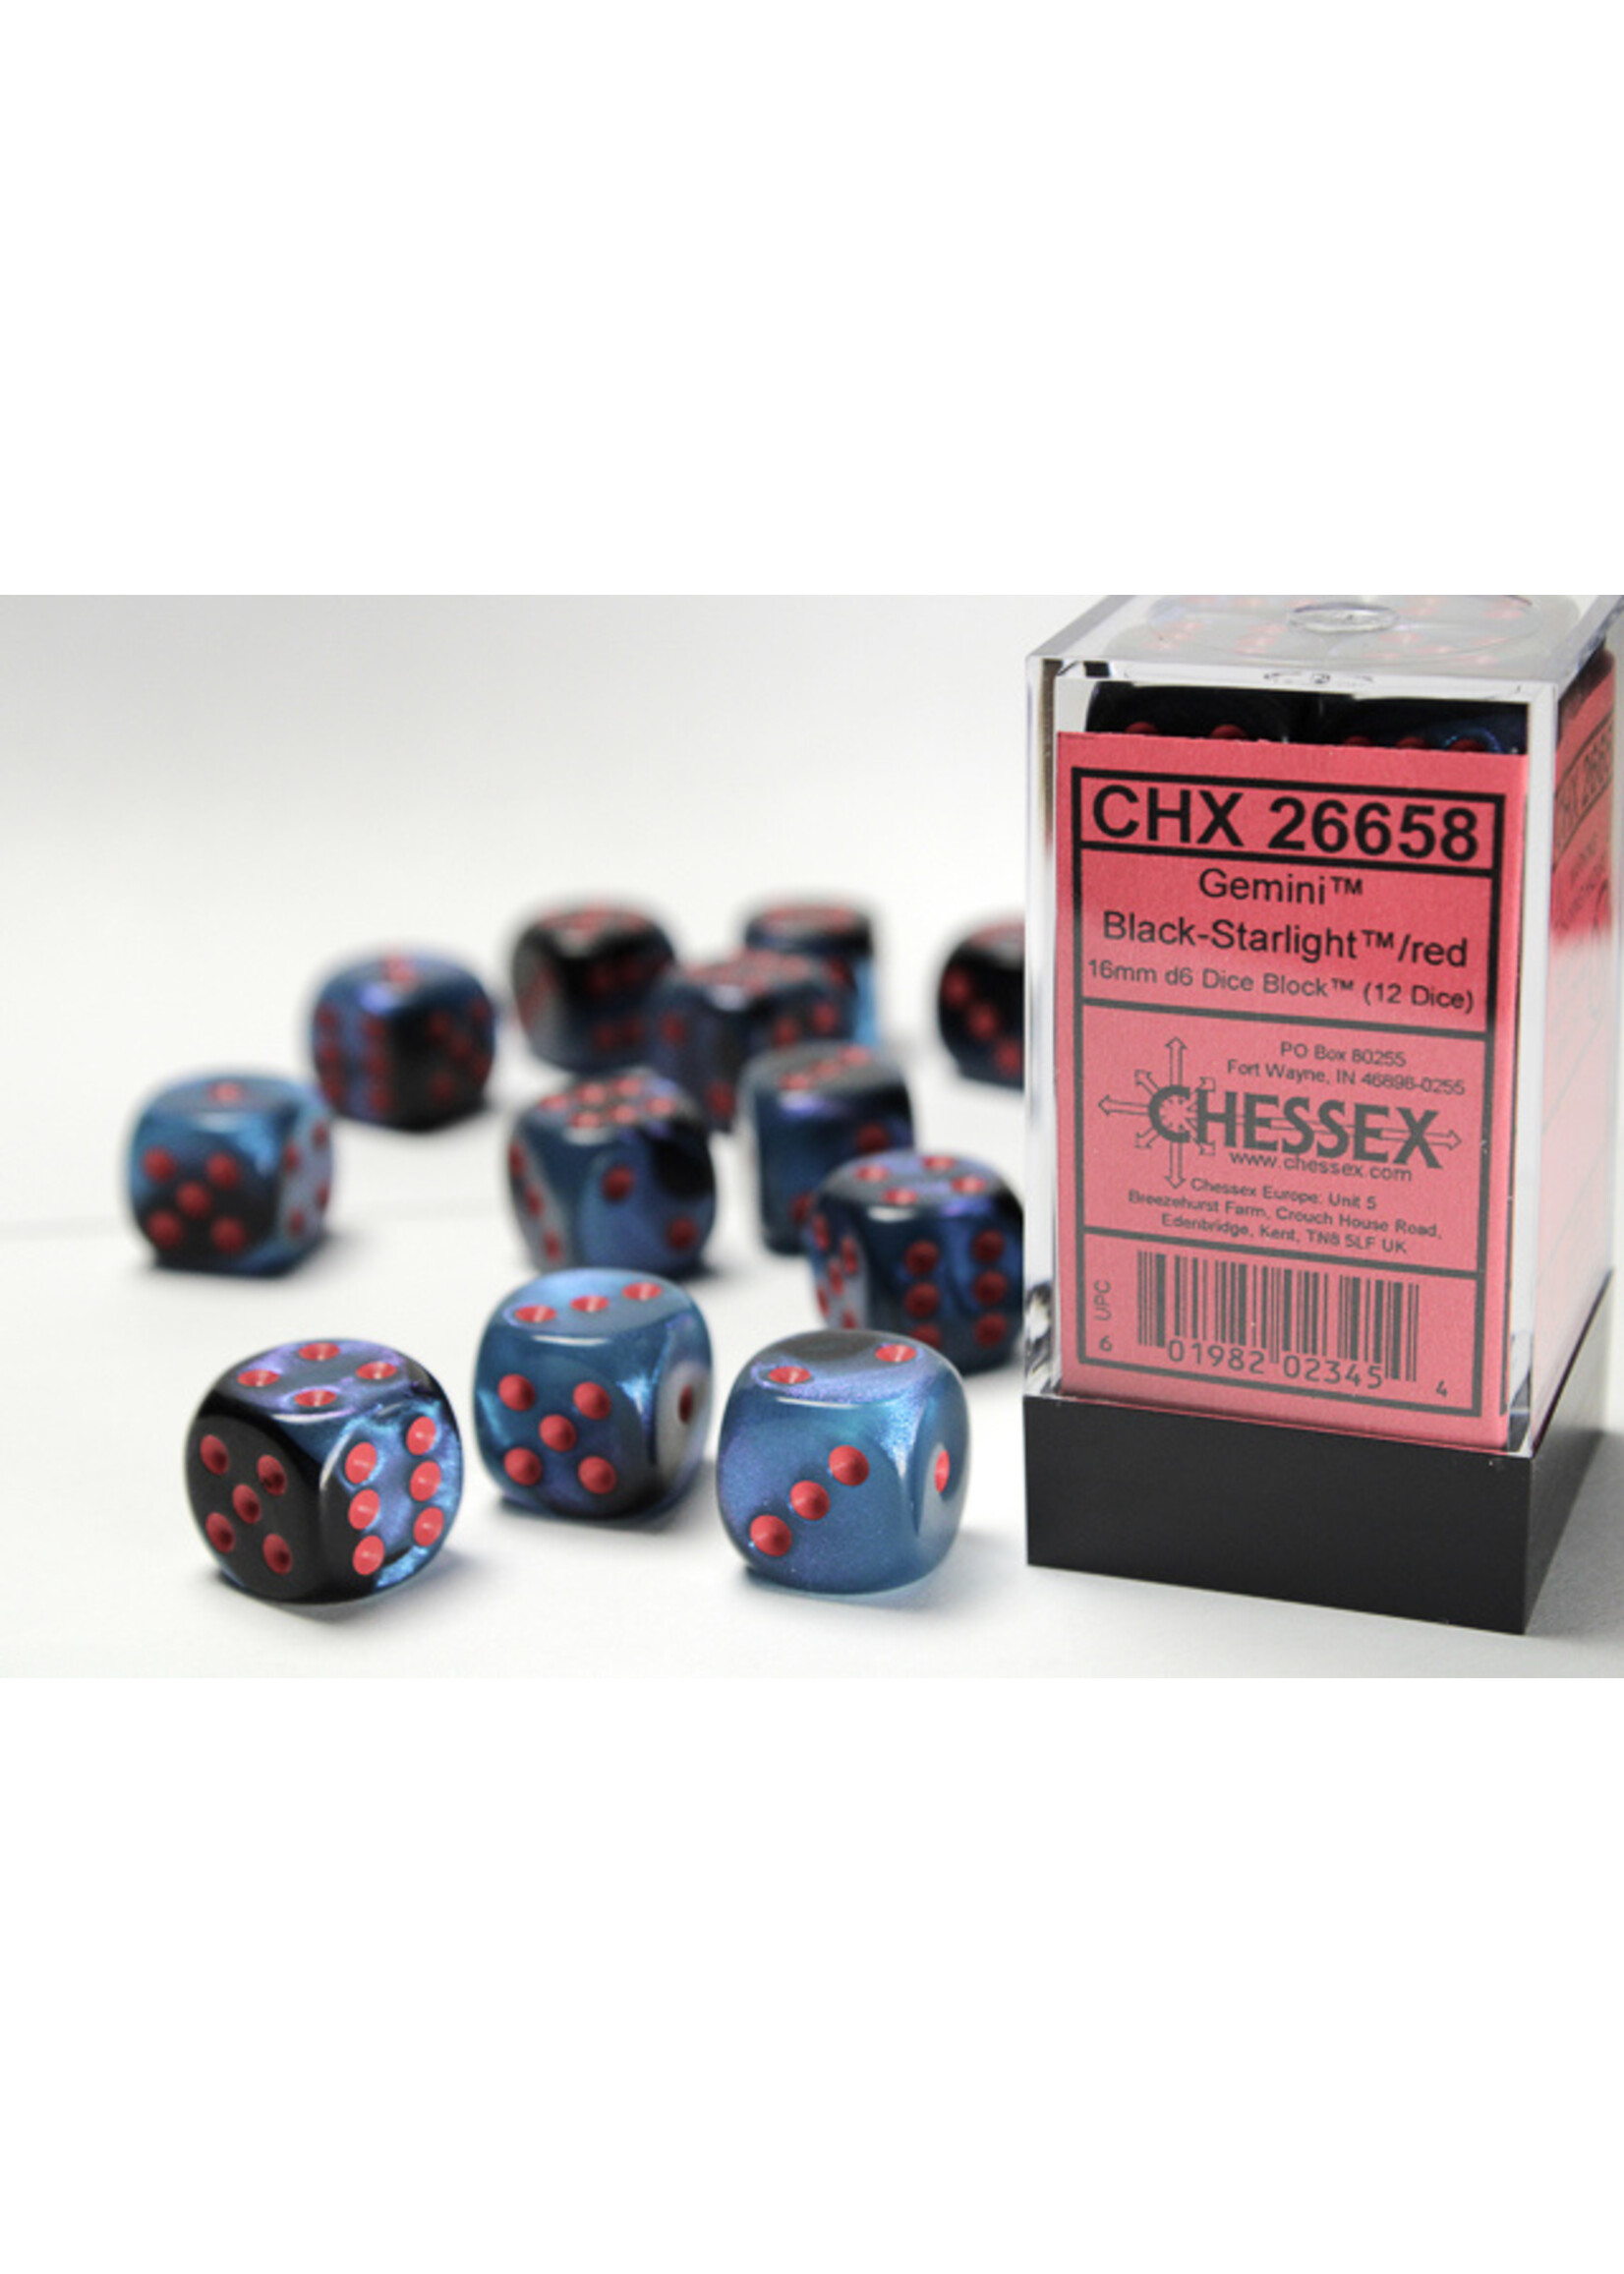 Chessex GMNI 12d6 black-starlight/red